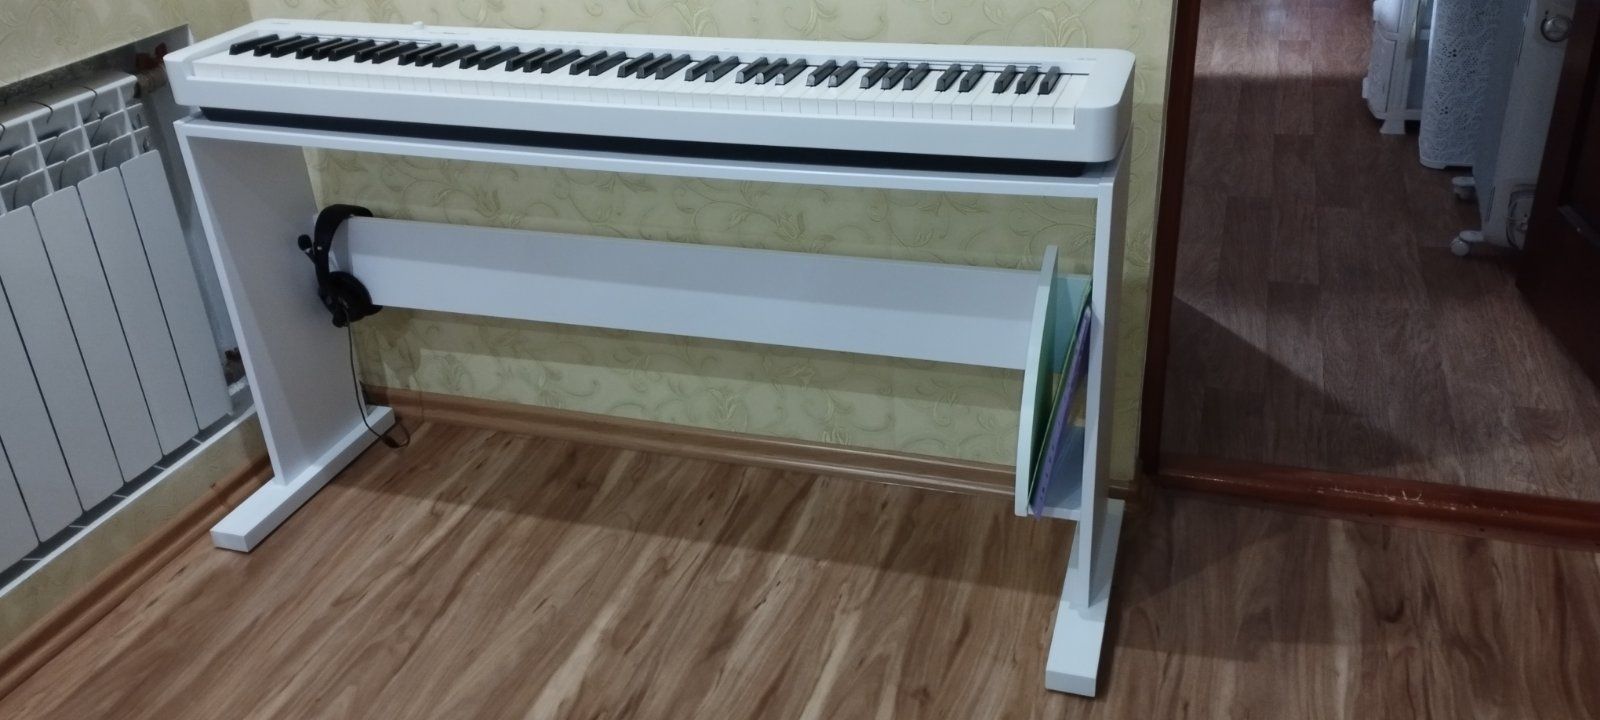 Продам стойку для цифрового пианино